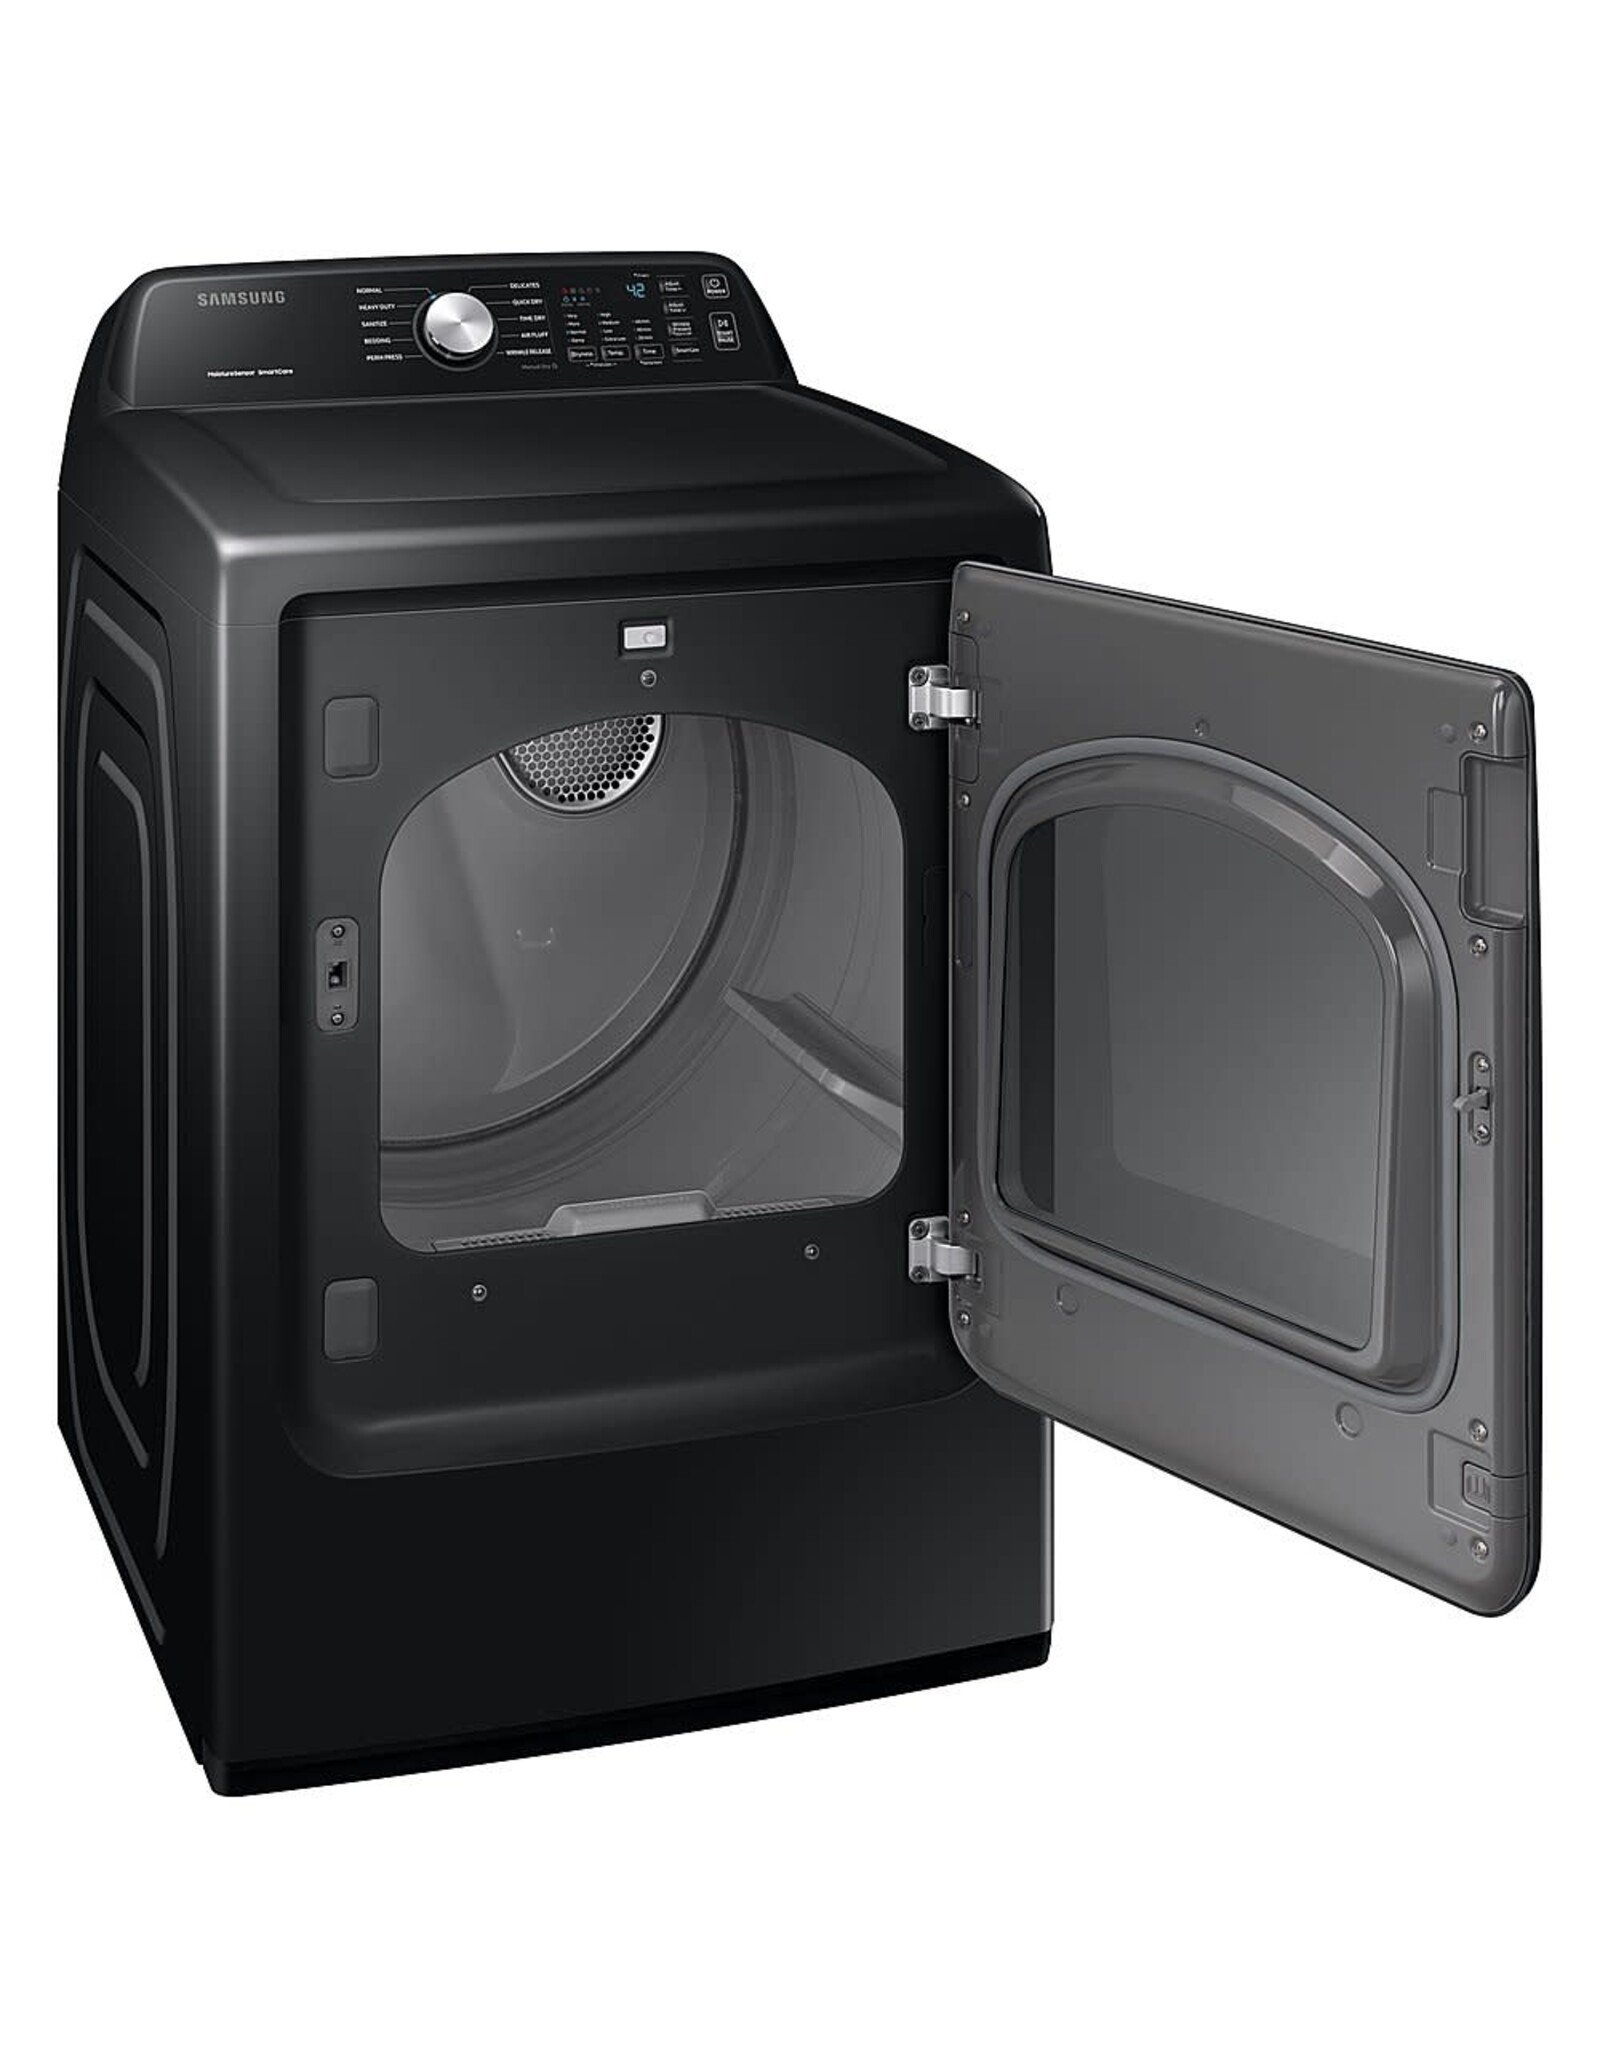 SAMSUNG 7.4 cu. ft. Gas Dryer with Sensor Dry in Platinum